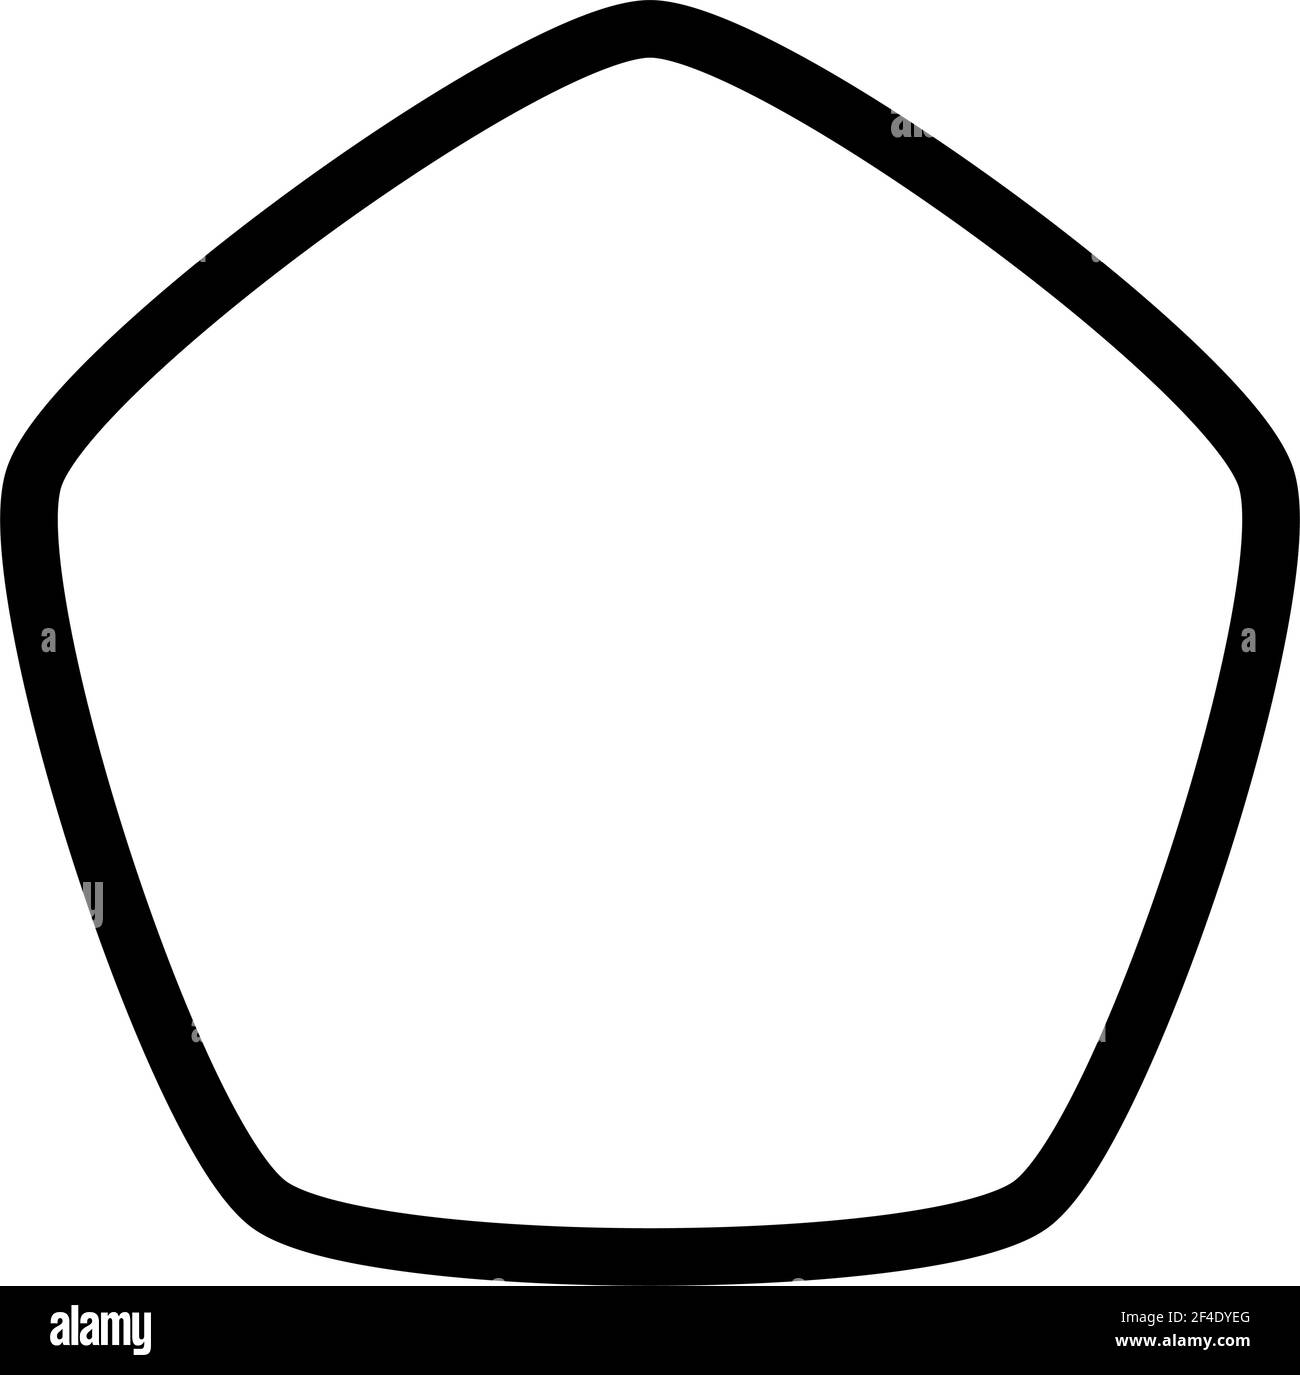 Rounded pentagon polygon contour, outline shape. Soft, smooth design  element – Stock vector illustration, Clip art graphics Stock Vector Image &  Art - Alamy